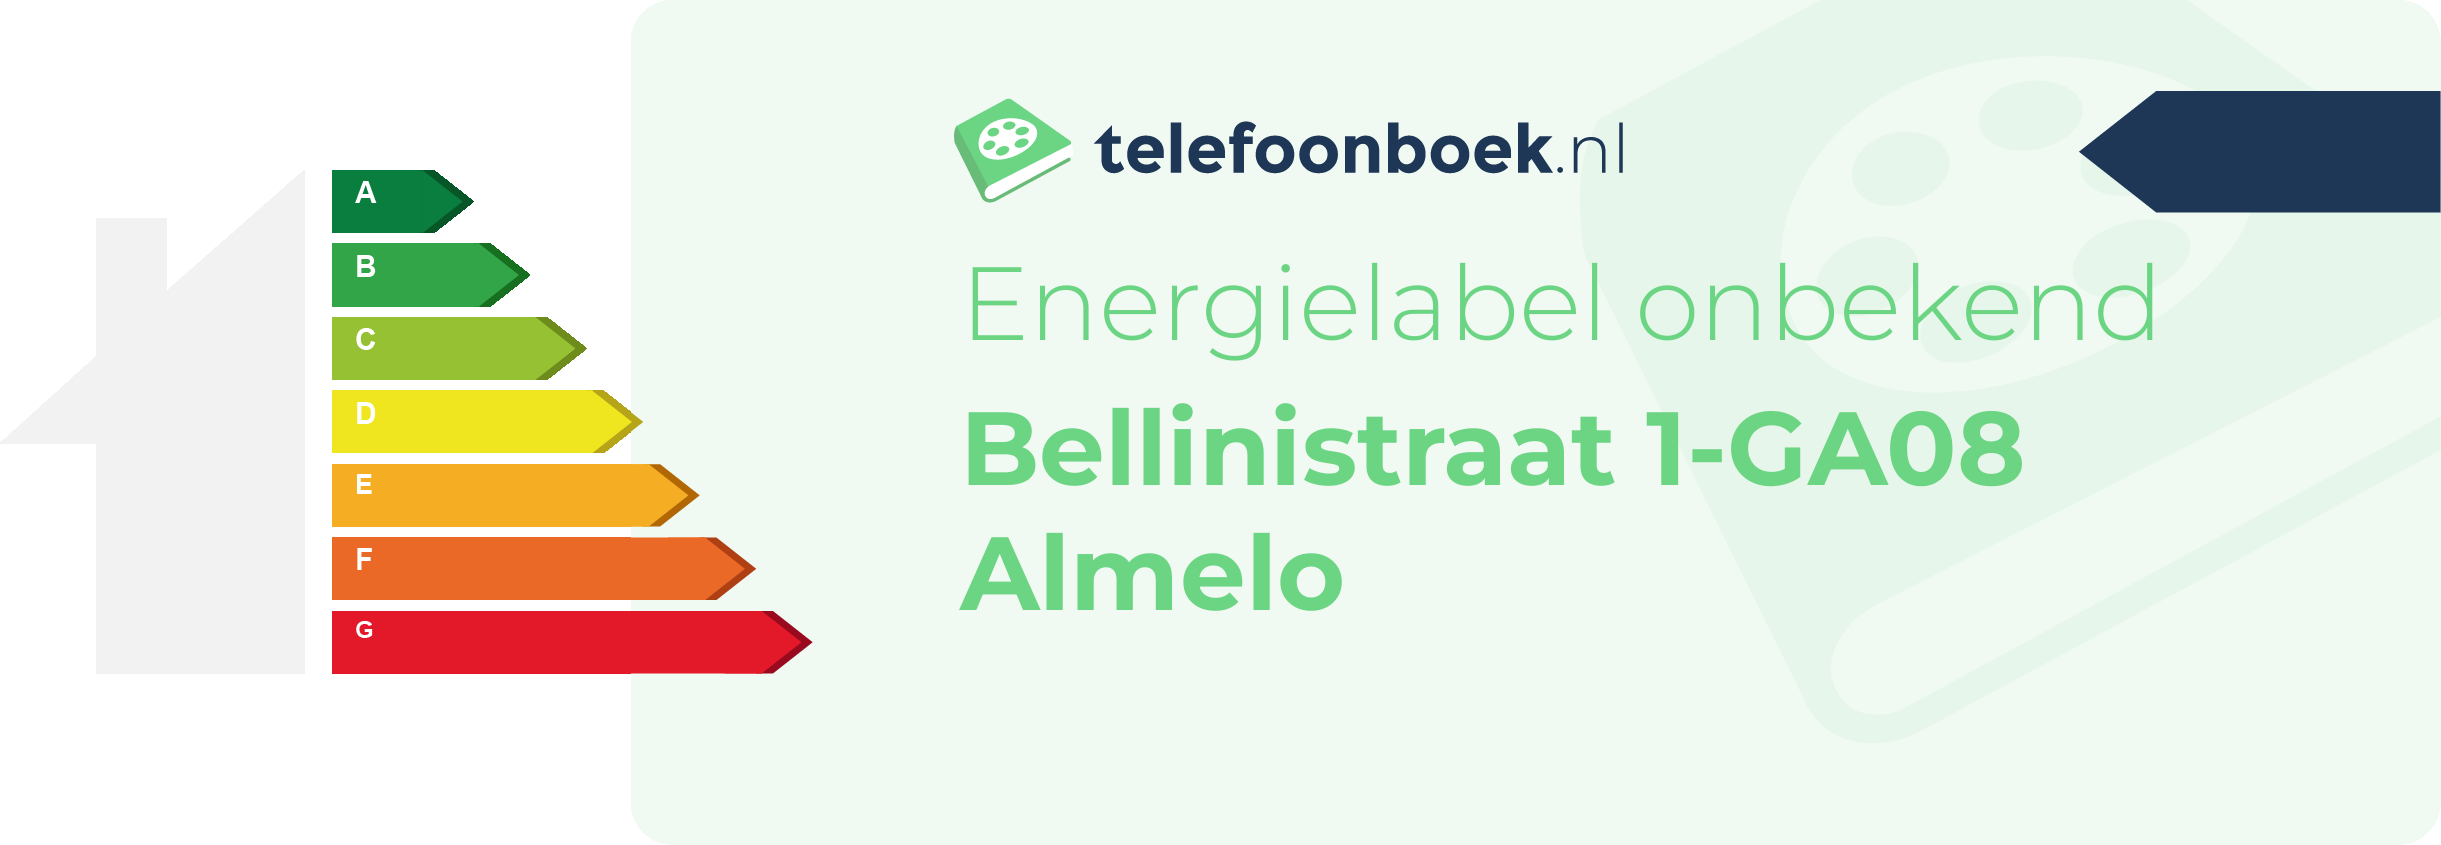 Energielabel Bellinistraat 1-GA08 Almelo